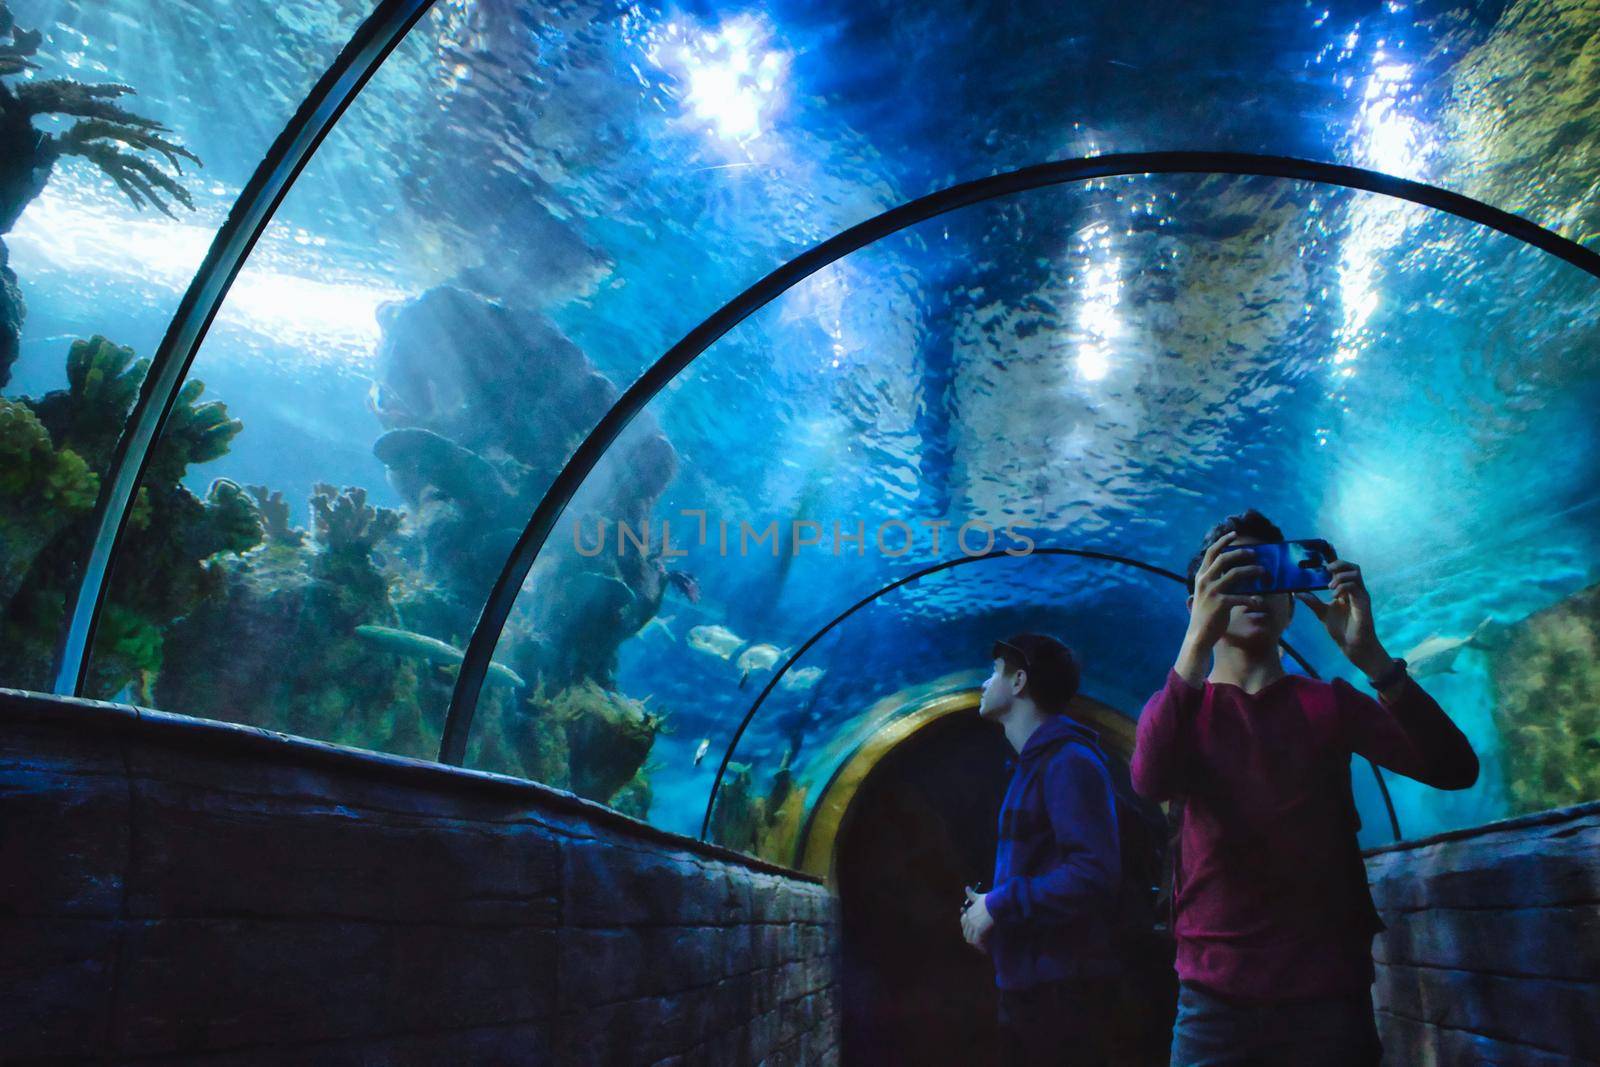 Qawra / Malta - November 22 2019: Teenagers taking photos from inside the tunnel at the National Aquarium, Malta